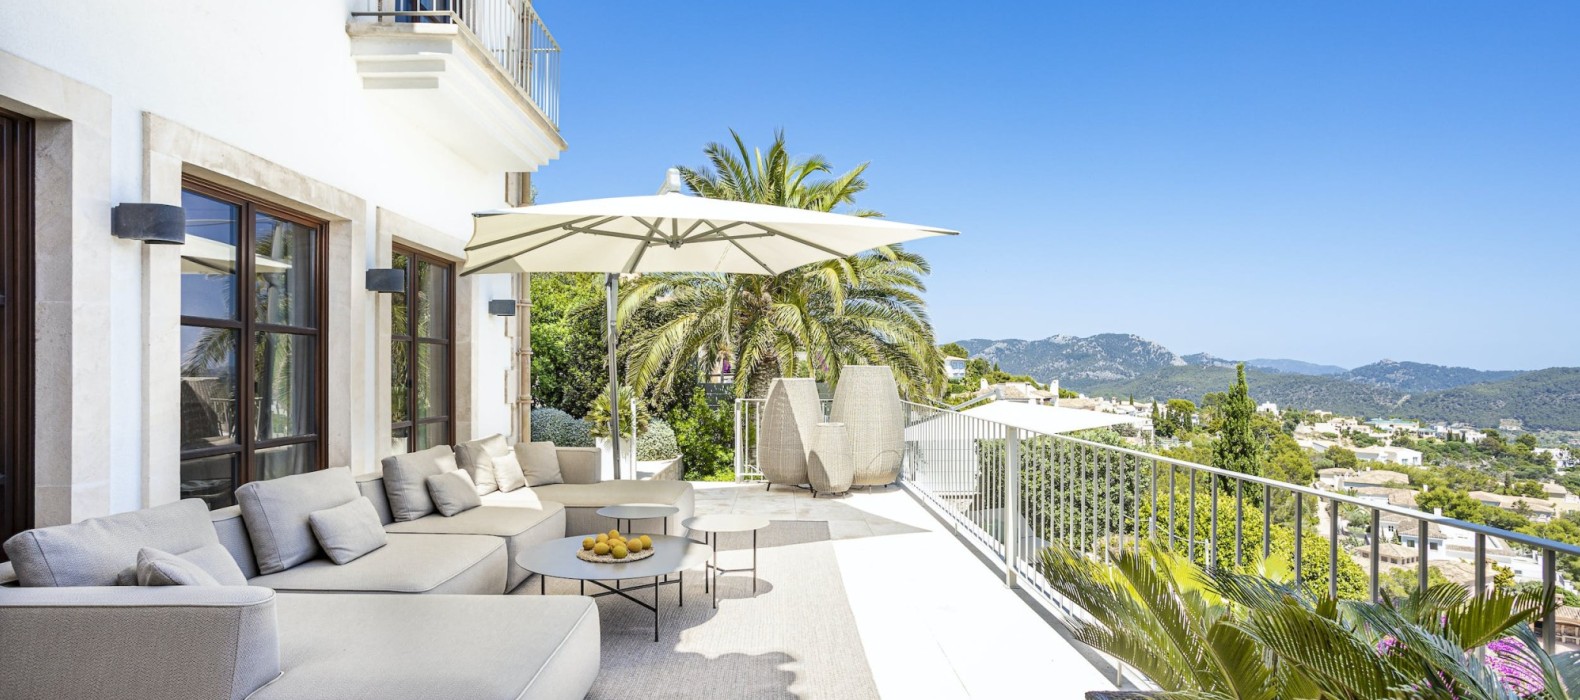 Terrace view of Finca Zircon in Mallorca